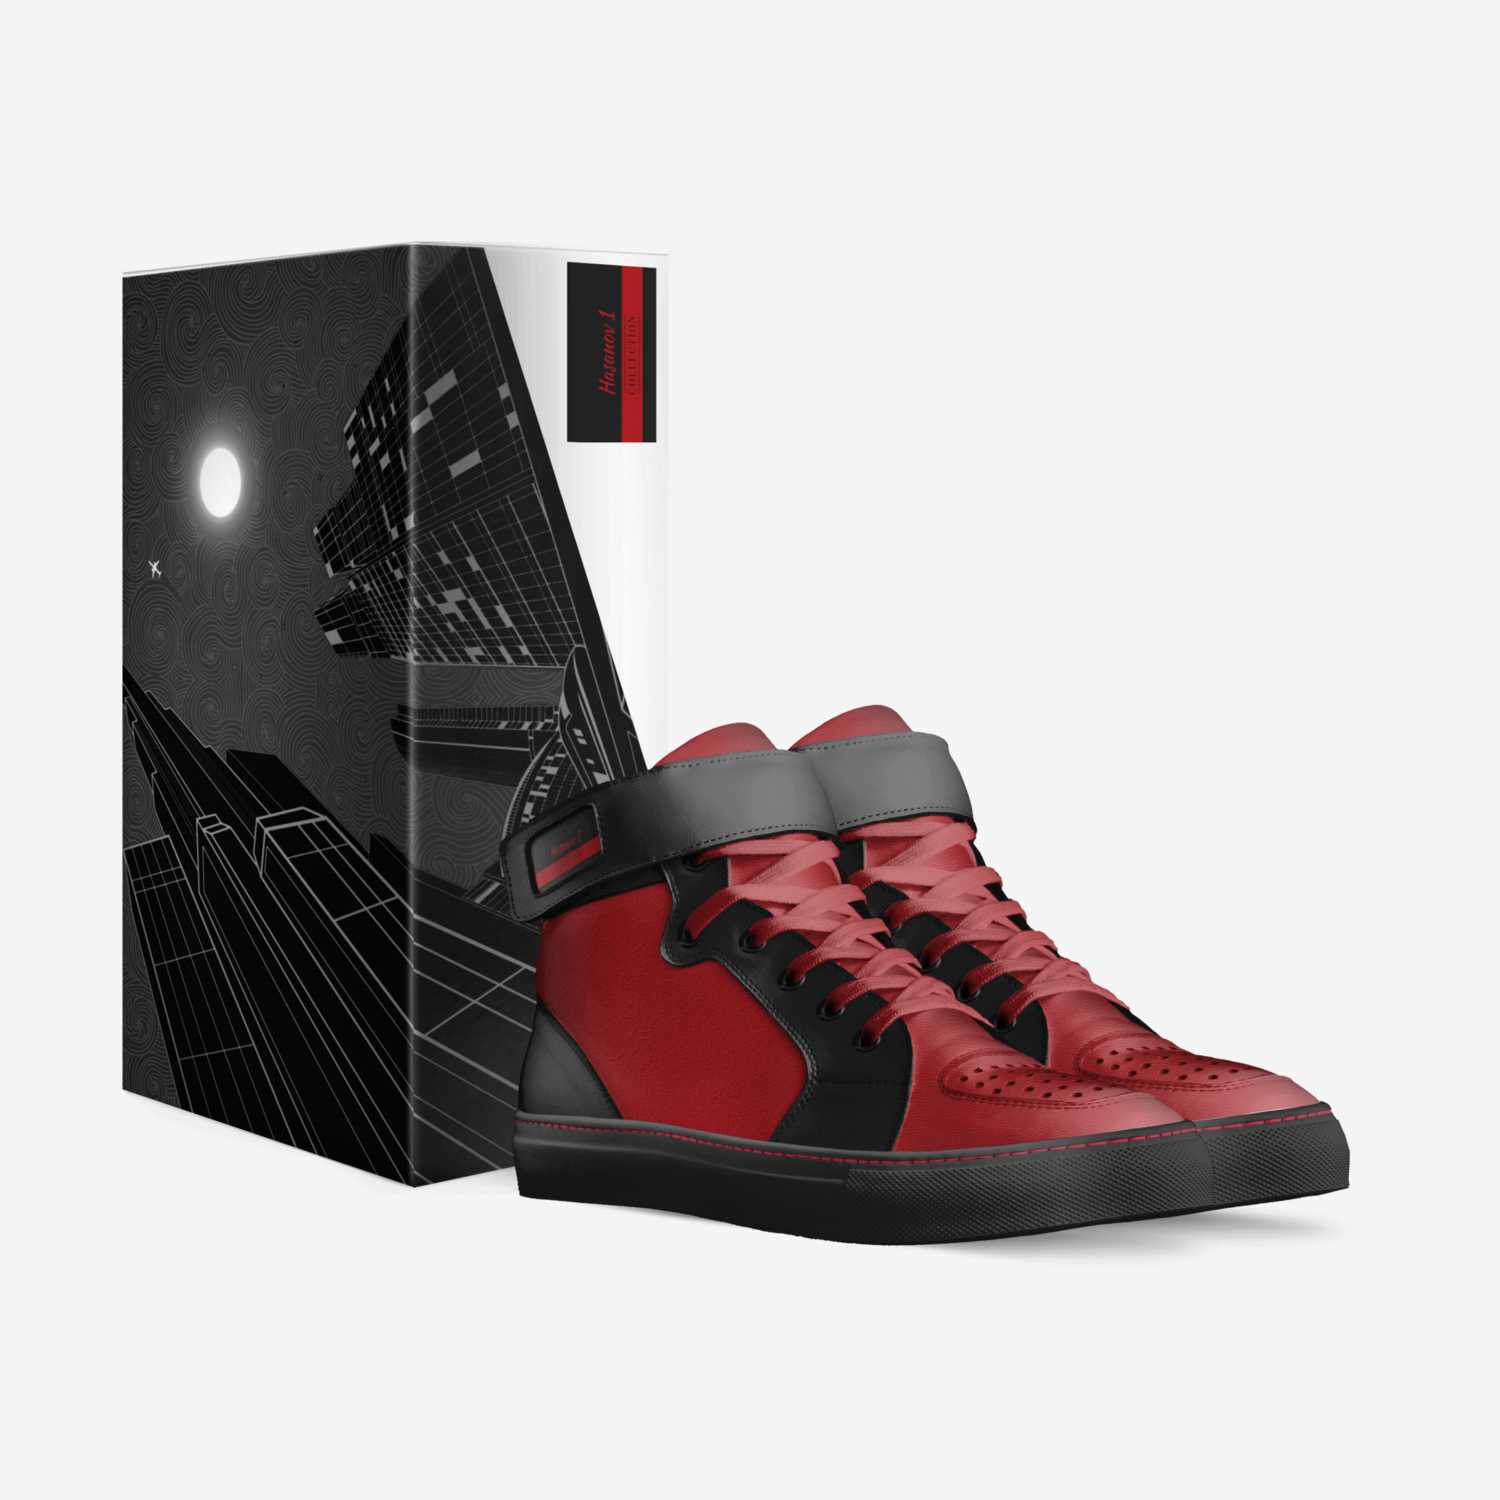 Hasanov 1 custom made in Italy shoes by Agil Hasanov | Box view